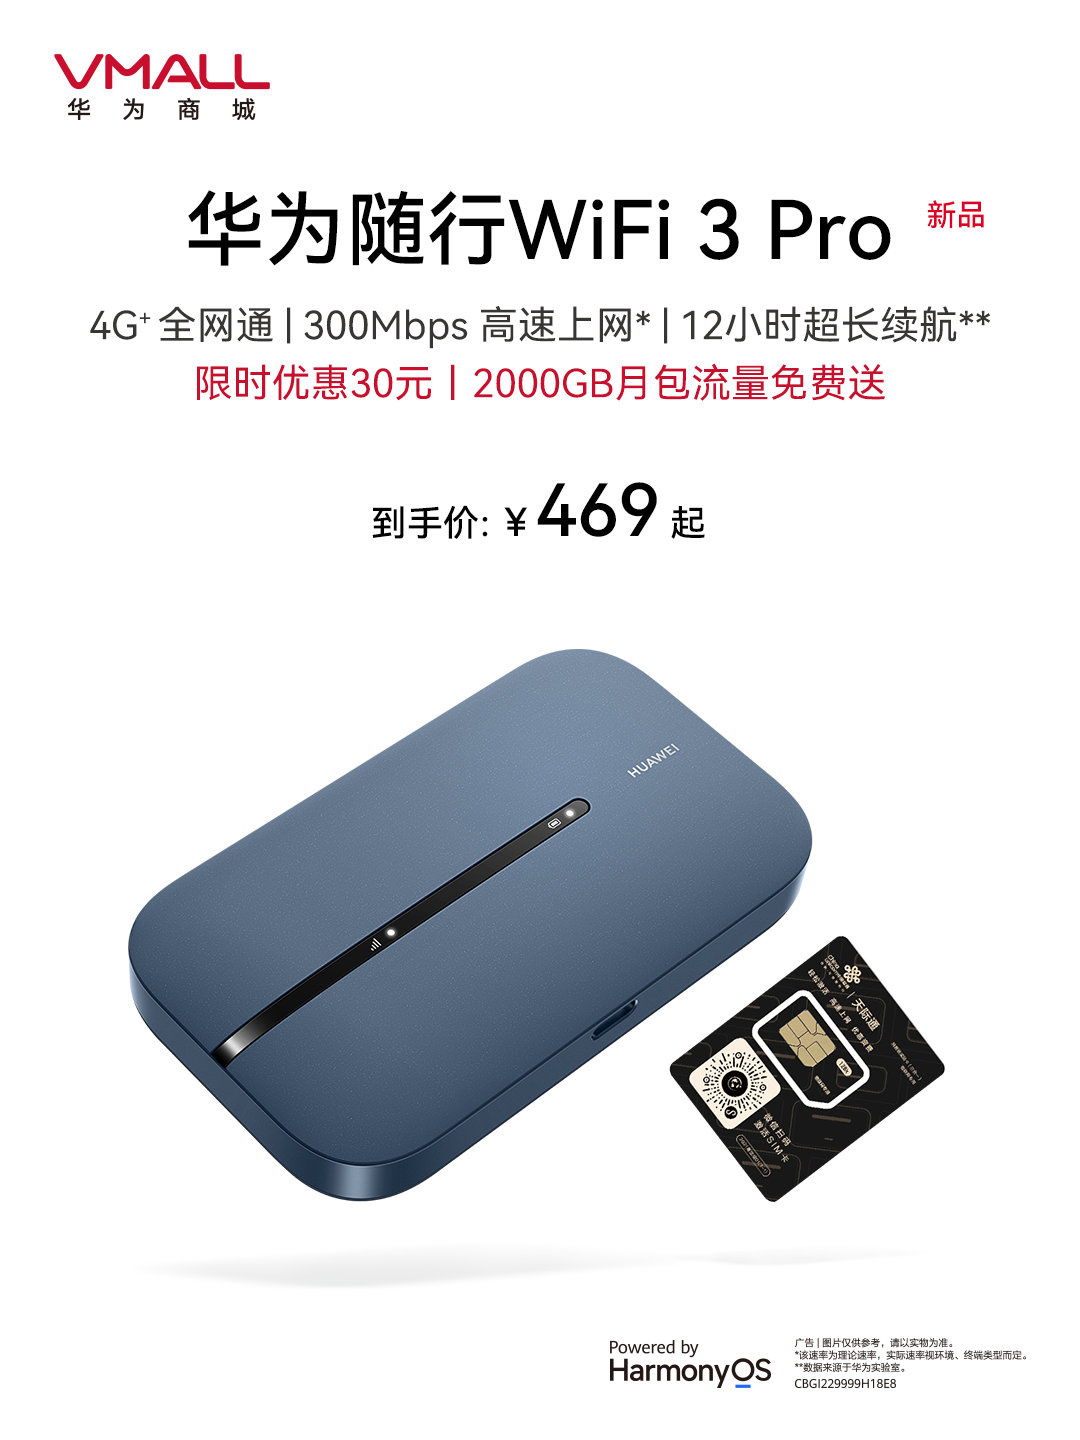 Huawei WiFi 3 Pro image